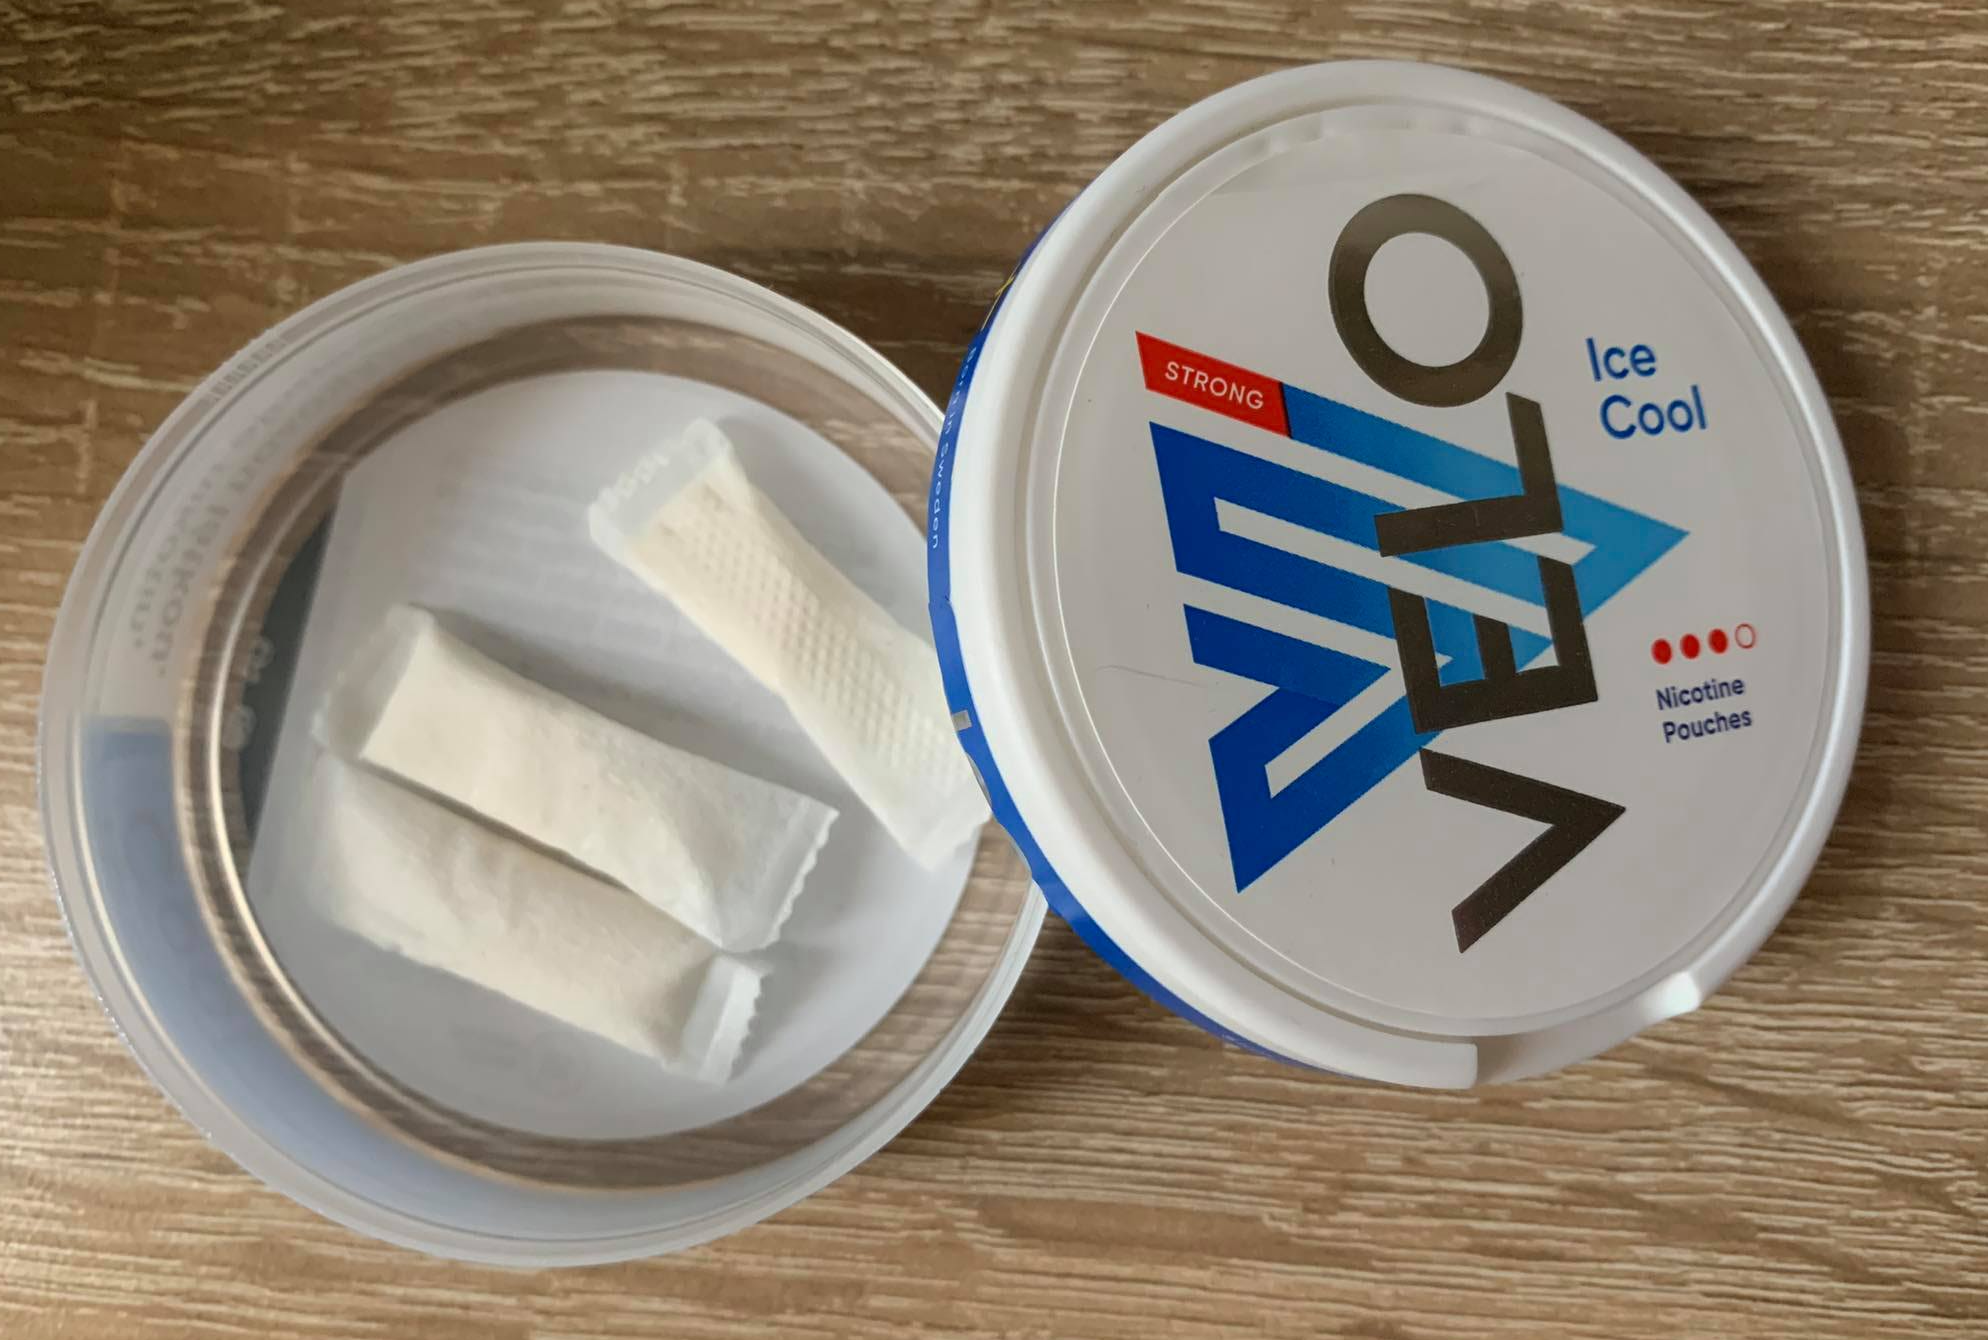 Thailand Snus – A Smoke-Free Alternative to Cigarettes